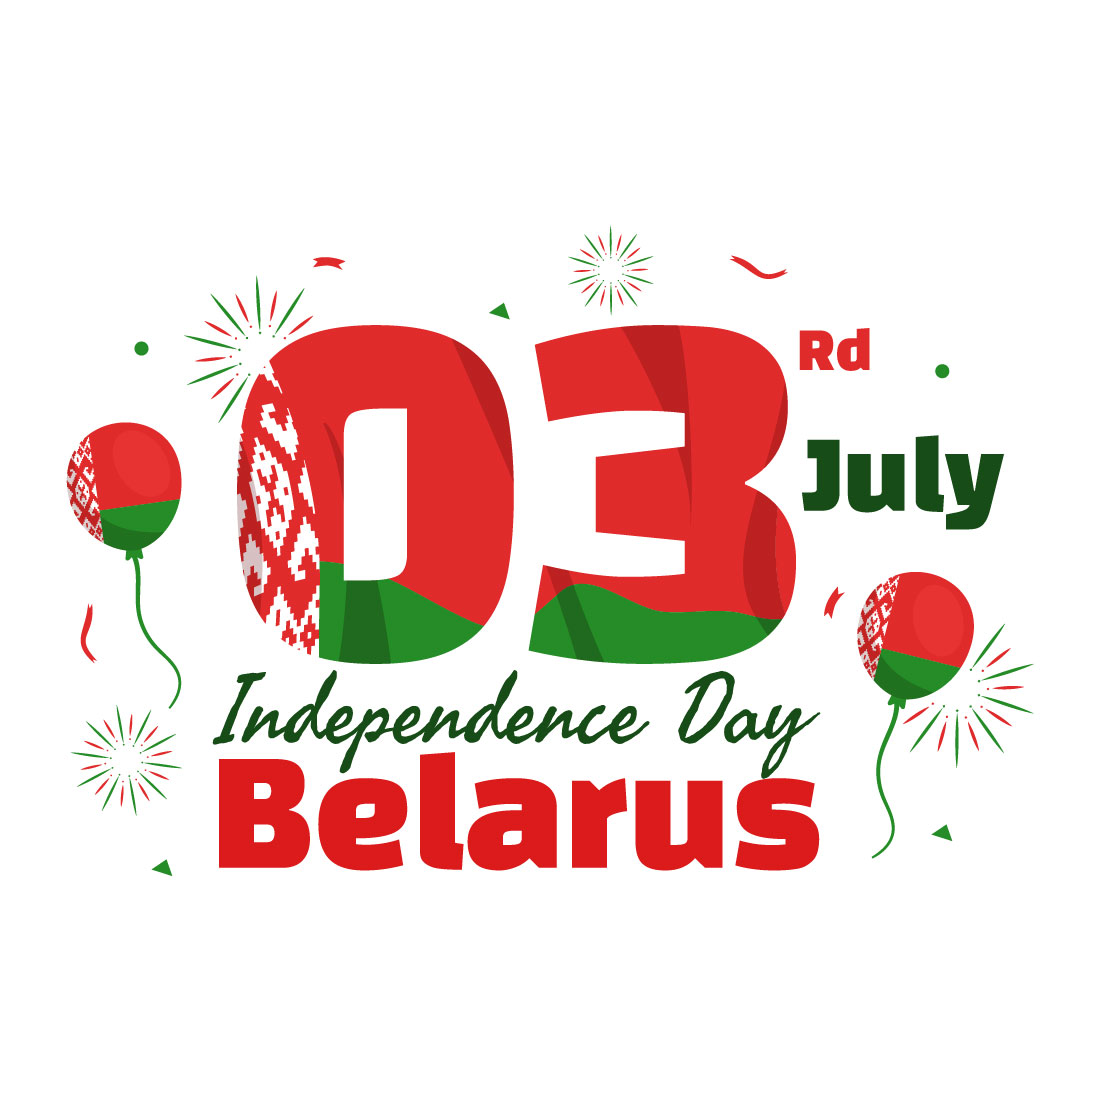 14 Belarus Independence Day Illustration preview image.